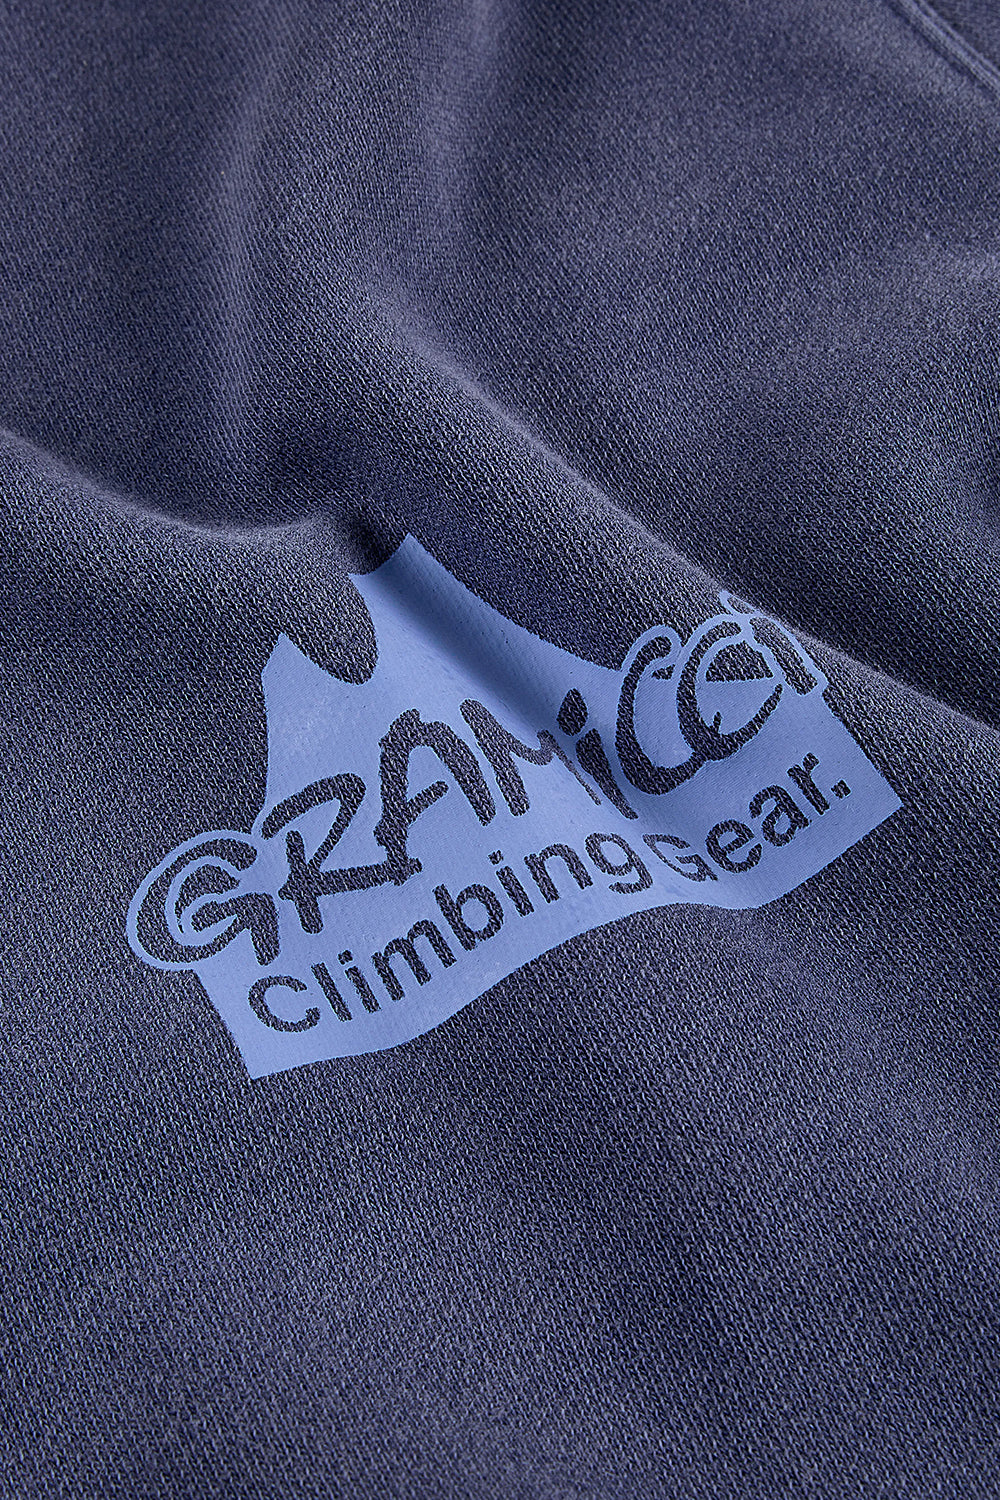 Gramicci Climbing Gear Hooded Sweatshirt (Navy Pigment)